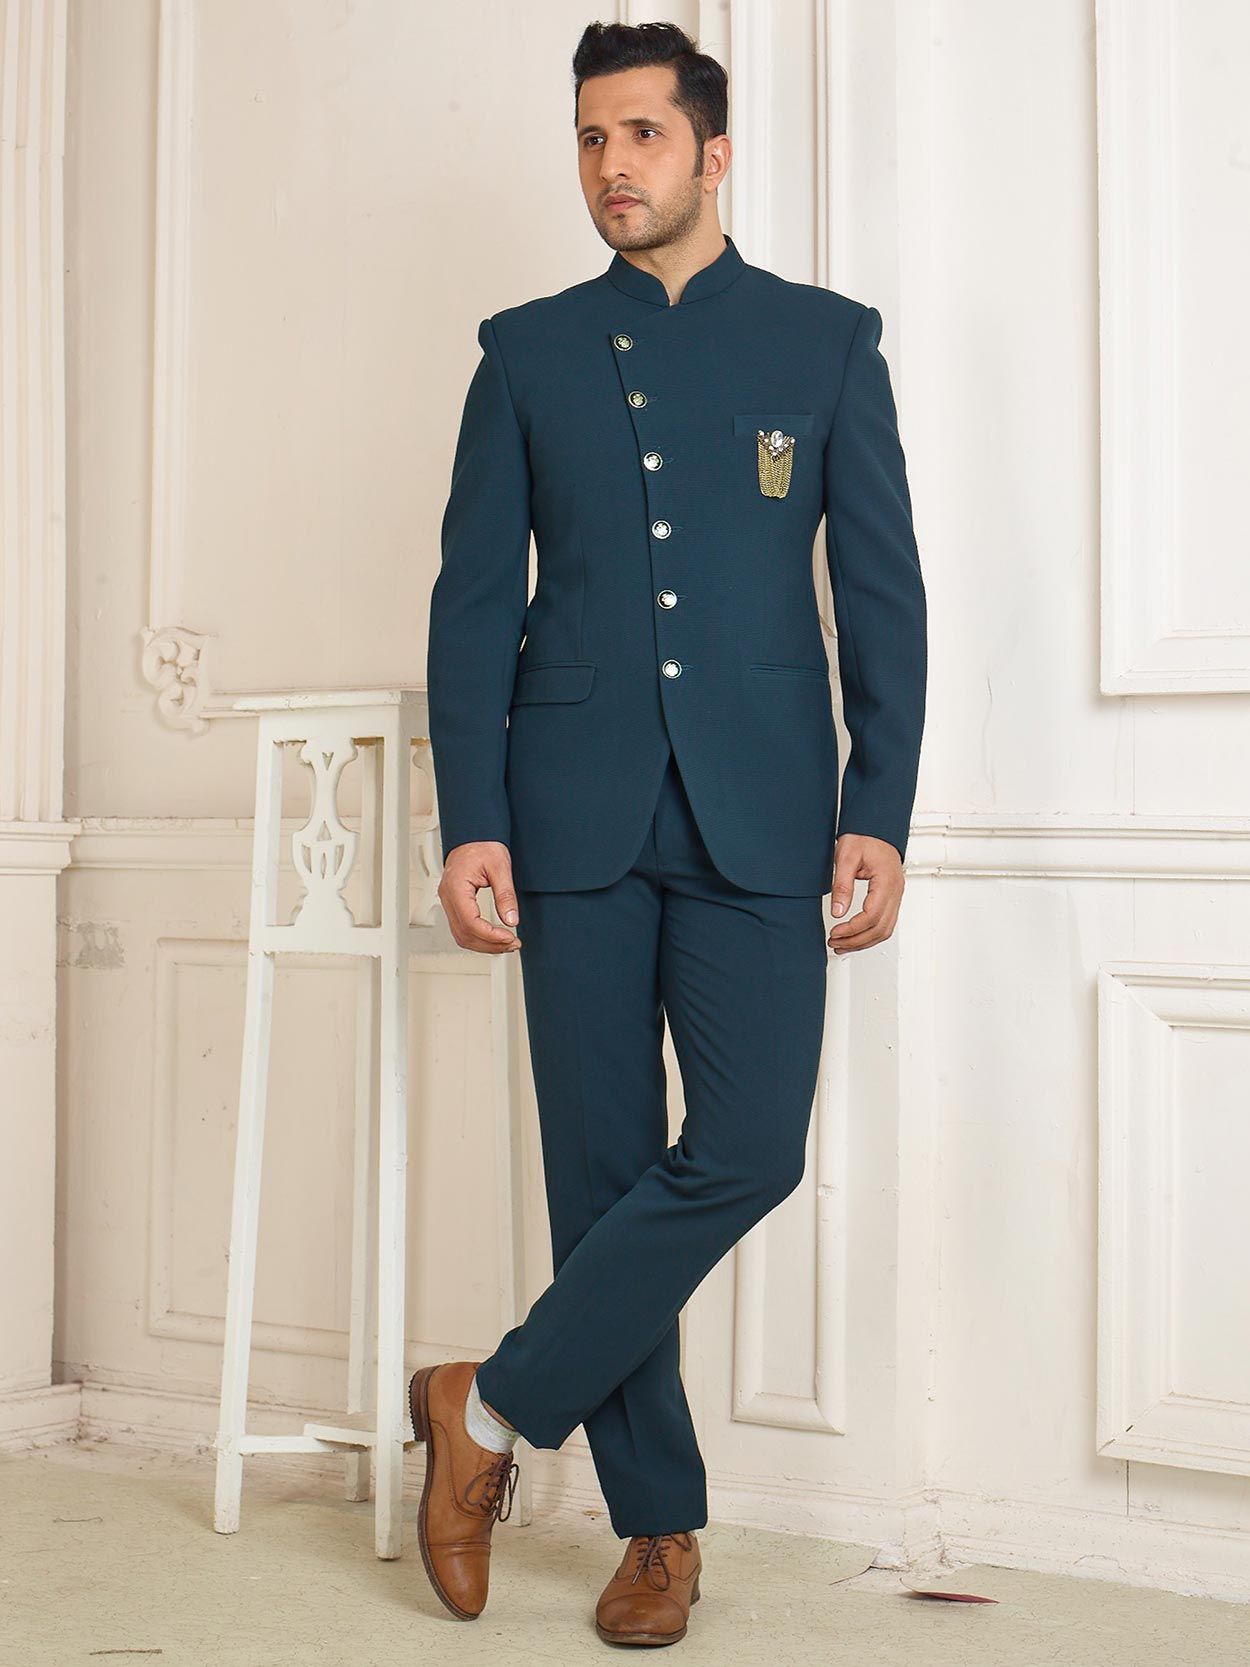 Business Men Suits Blue Green Blazer Wedding Groom Wear Tuxedos 2 Pieces  Jackets | eBay